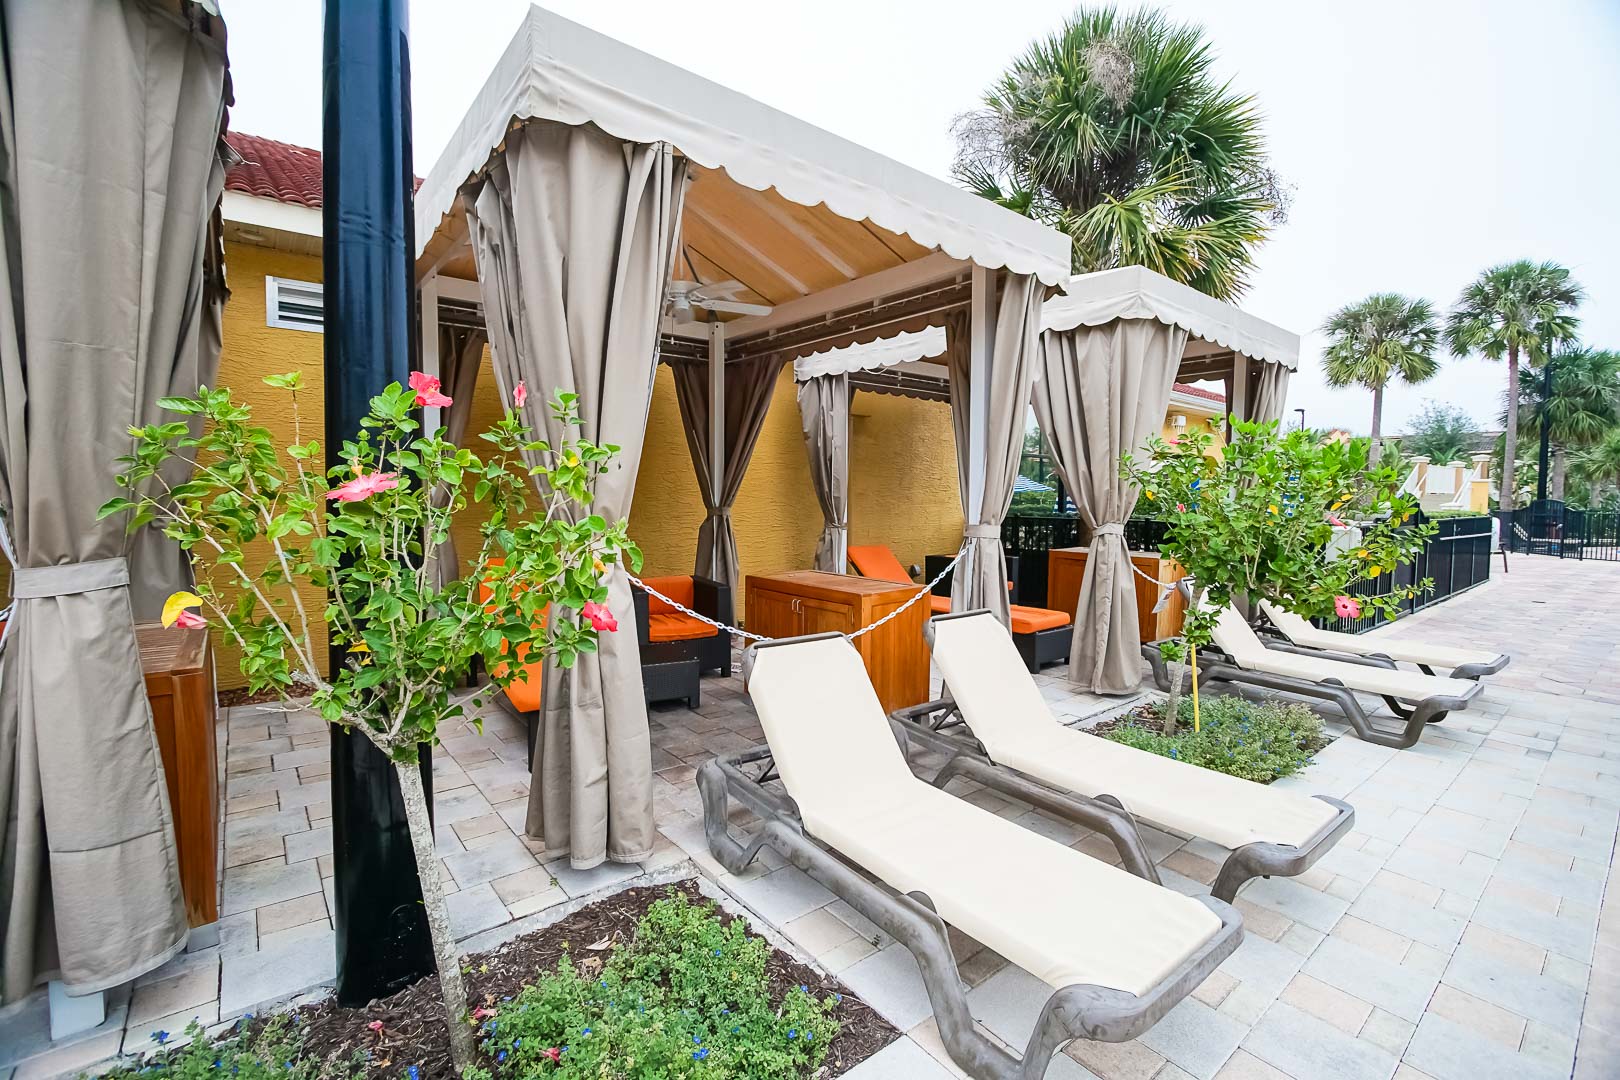 A modern pool lounging area at VRI's Fantasy World Resort in Florida.